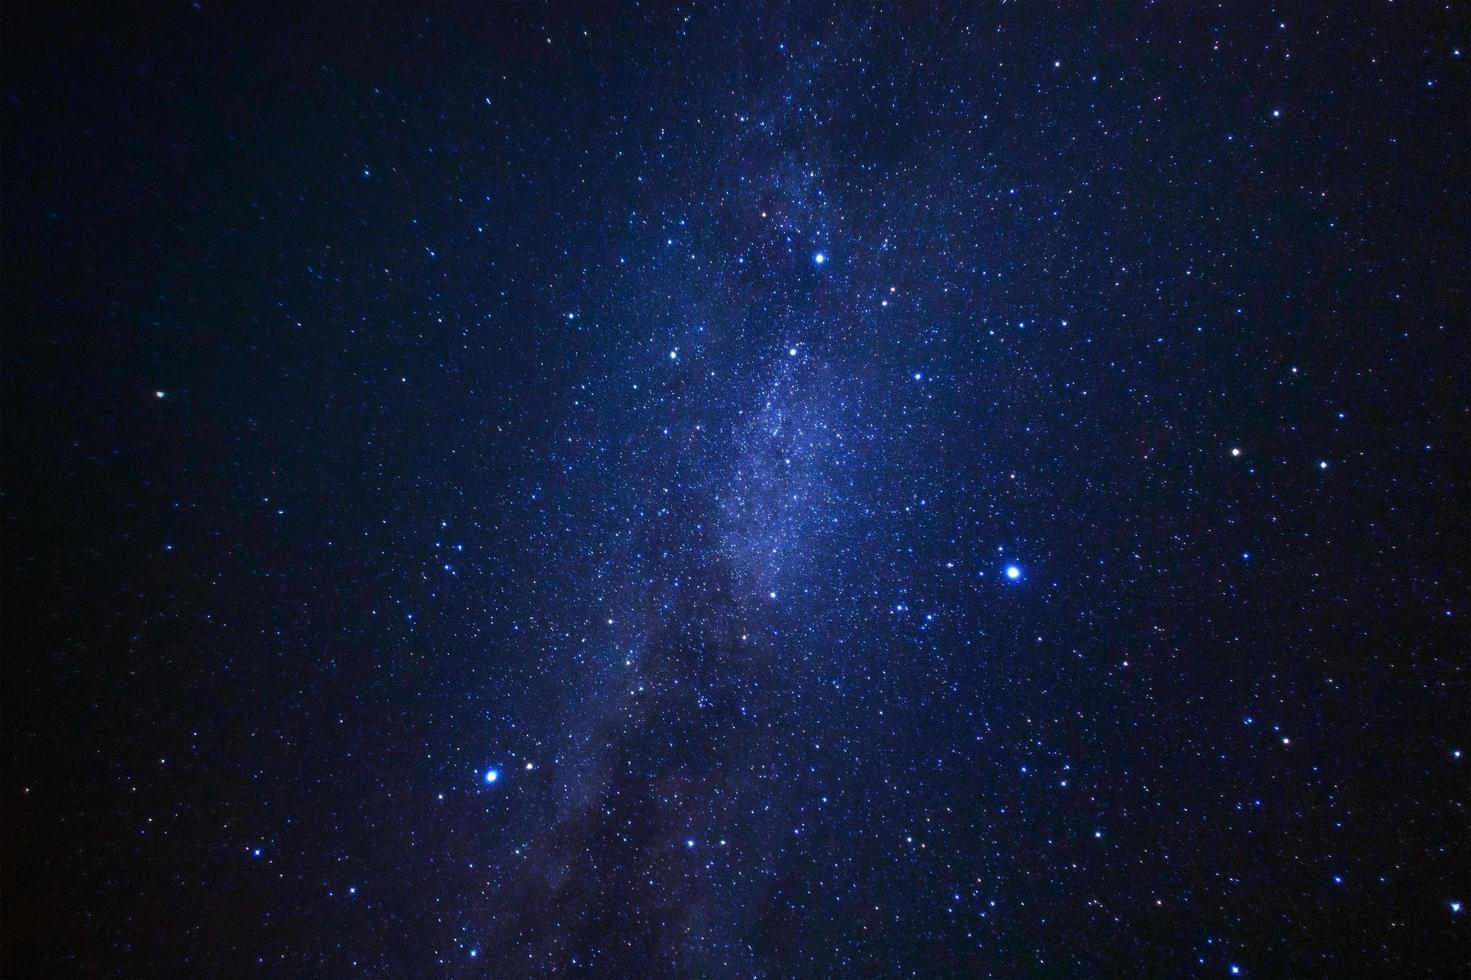 melkwegstelsel met sterren en ruimtestof in het heelal, lange blootstellingsfoto, met graan. foto